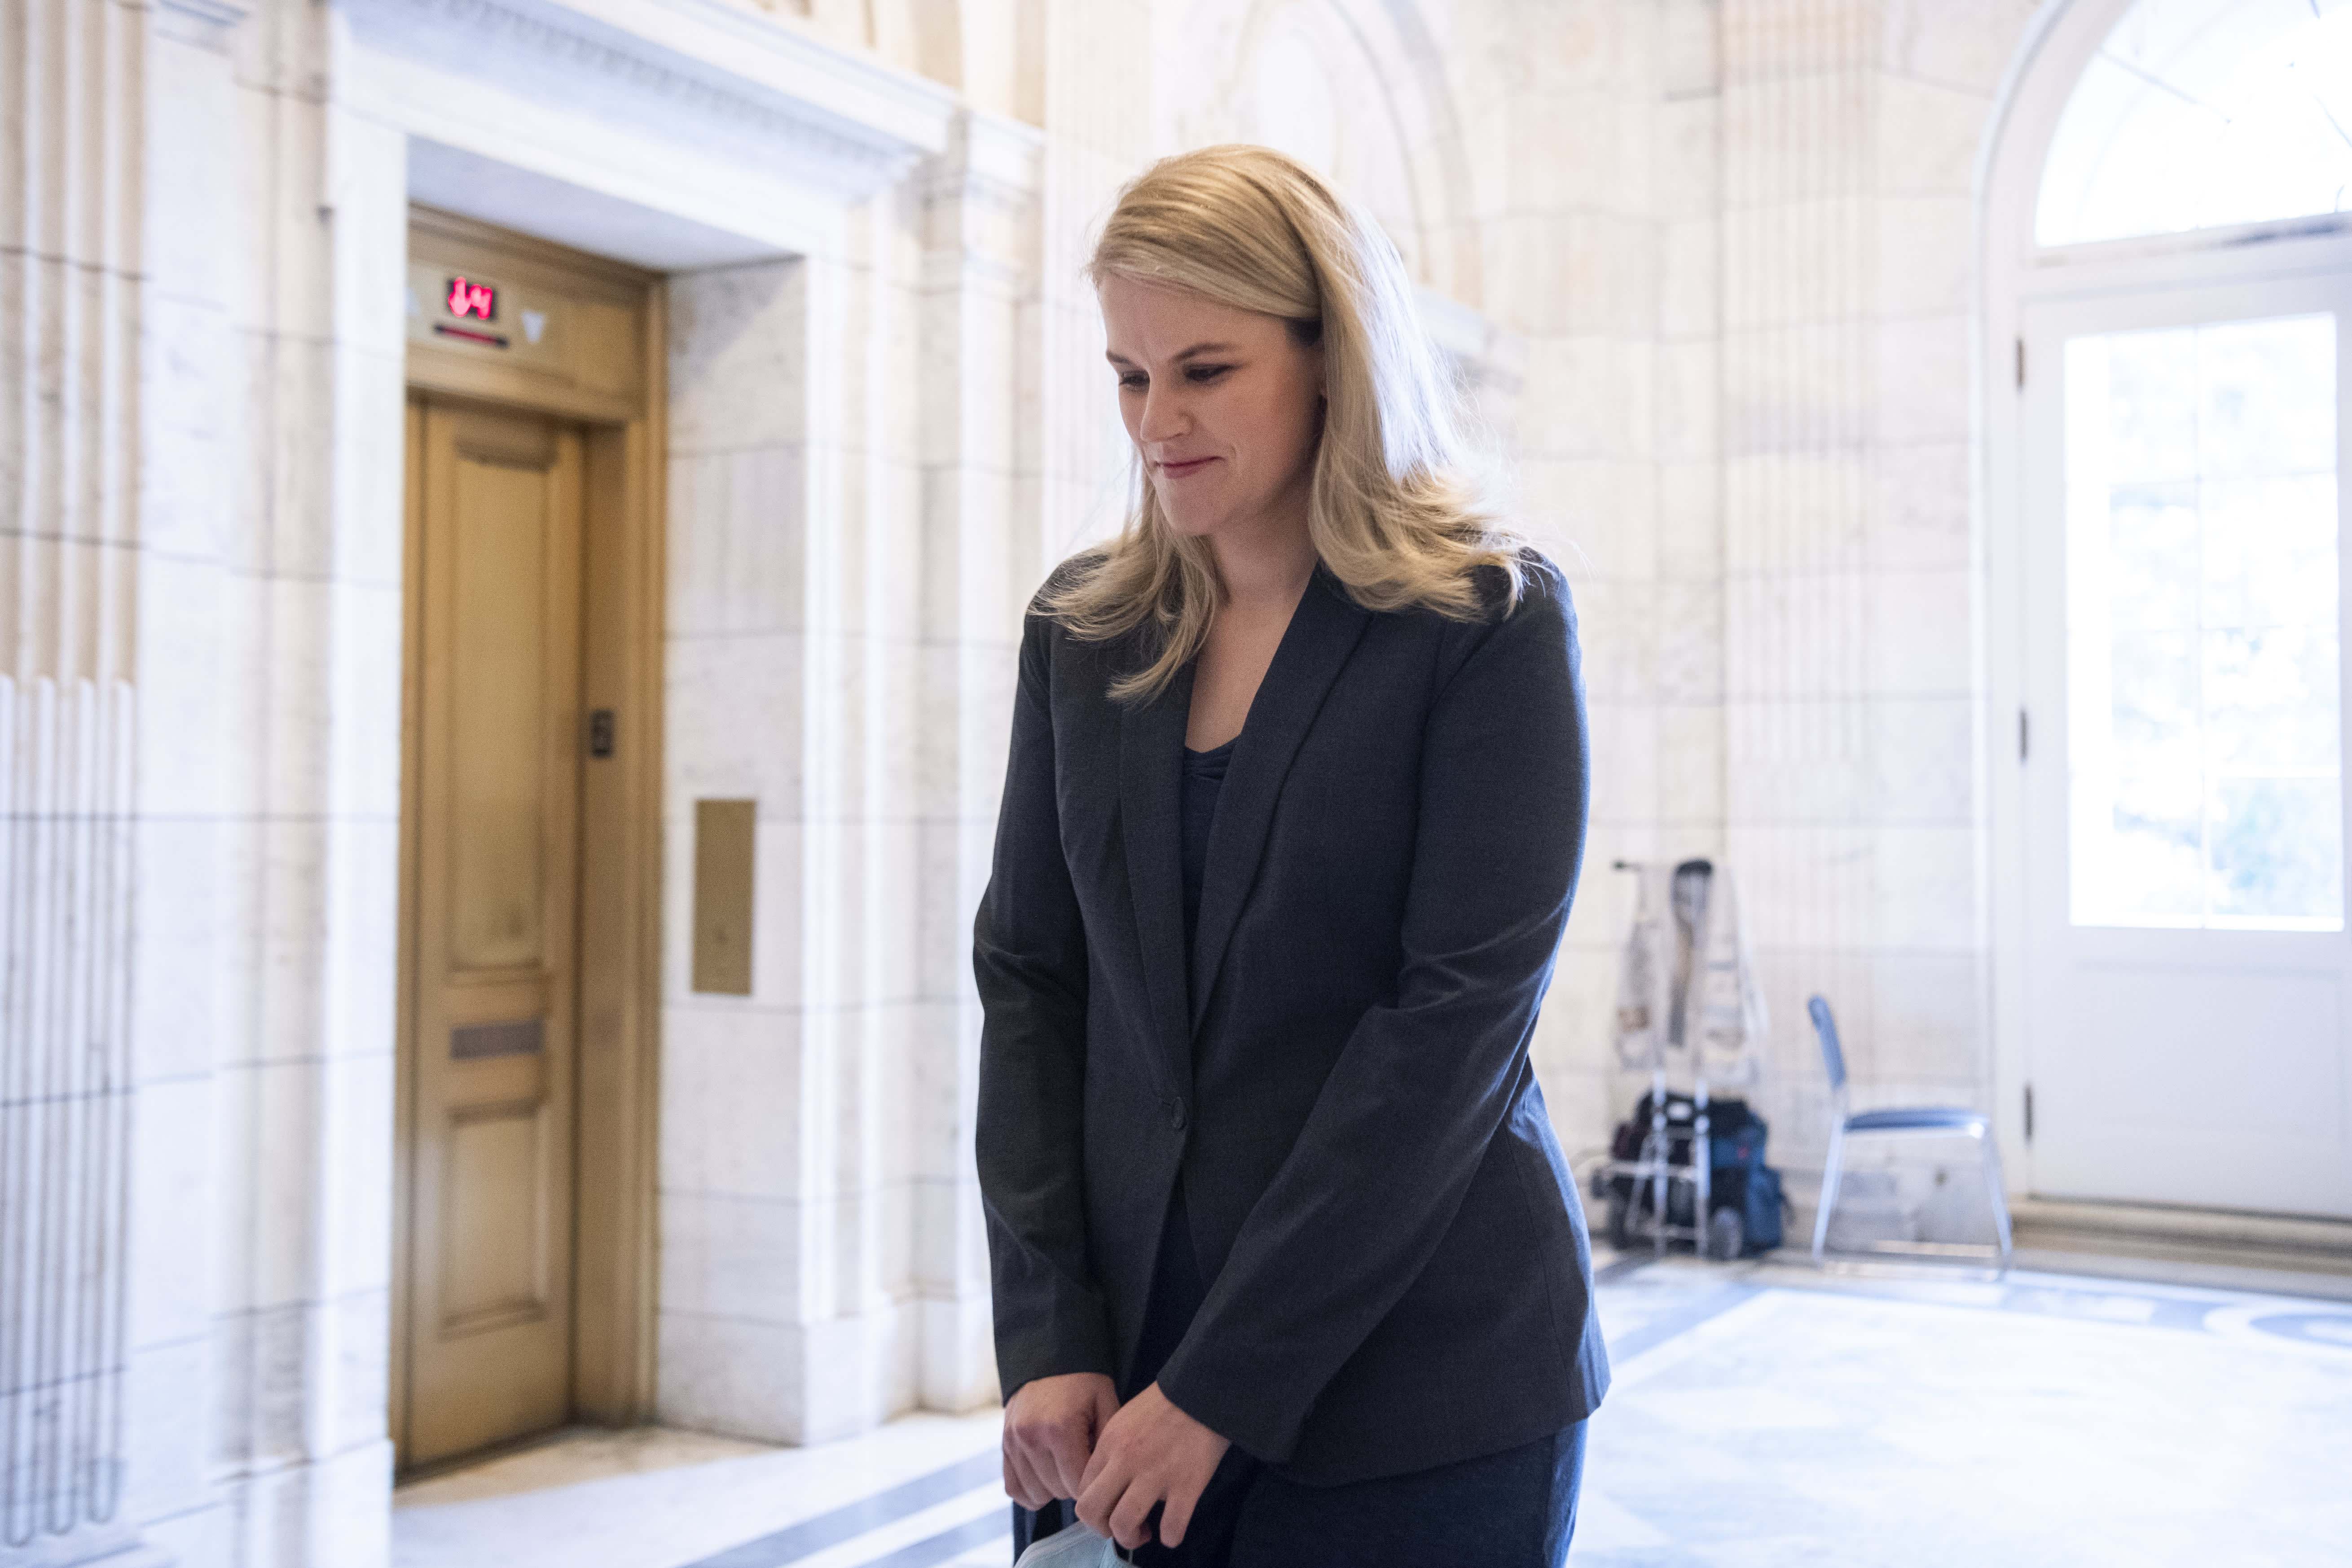 Watch as Facebook whistleblower Frances Haugen testifies before the Senate